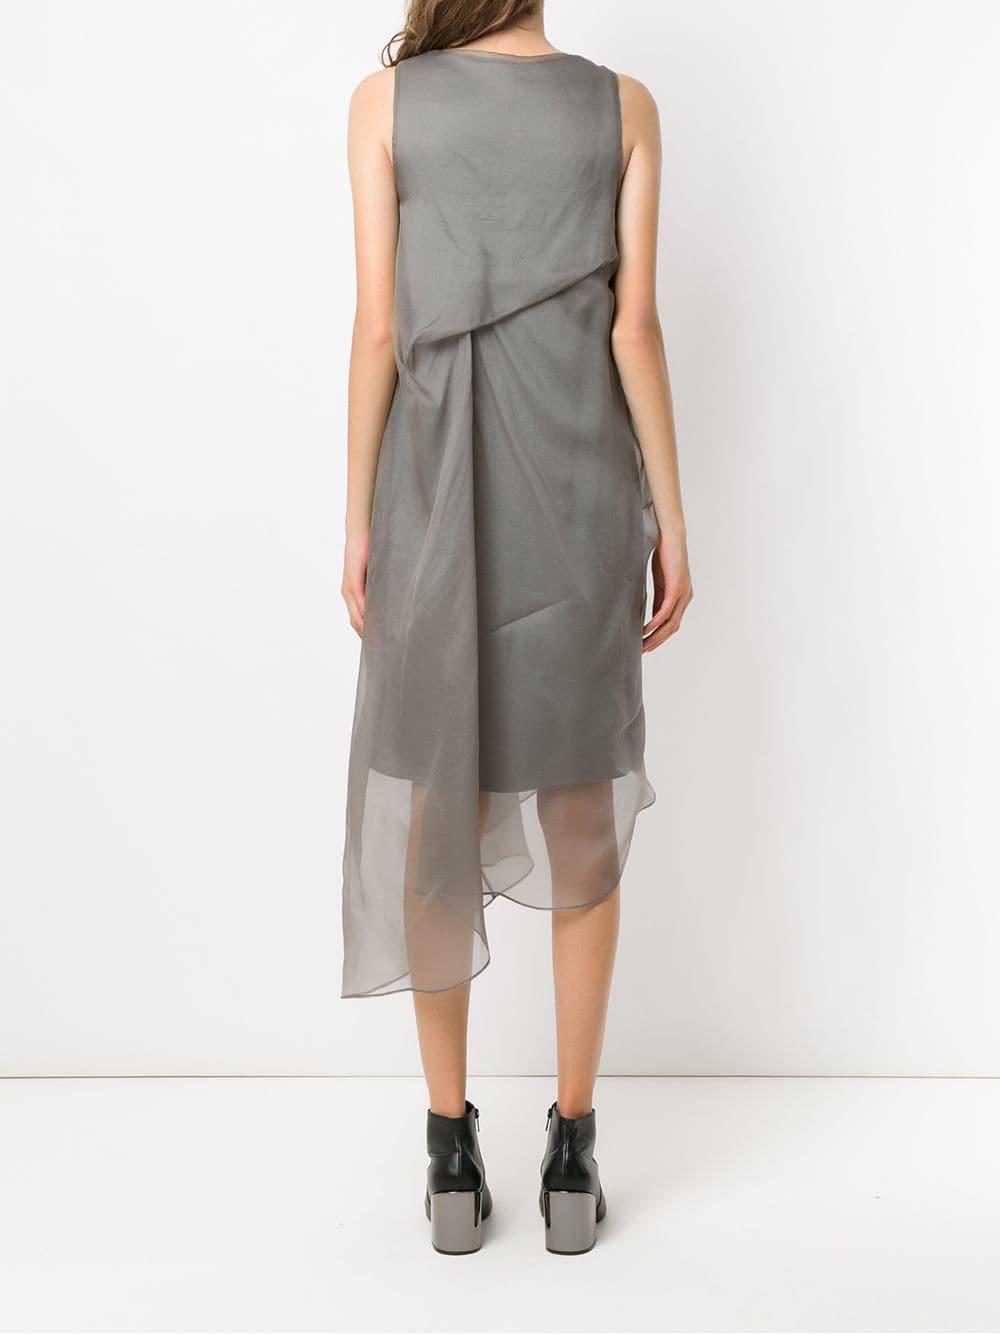 UMA | Raquel Davidowicz Silk Loren Midi Dress in Grey (Gray) - Lyst